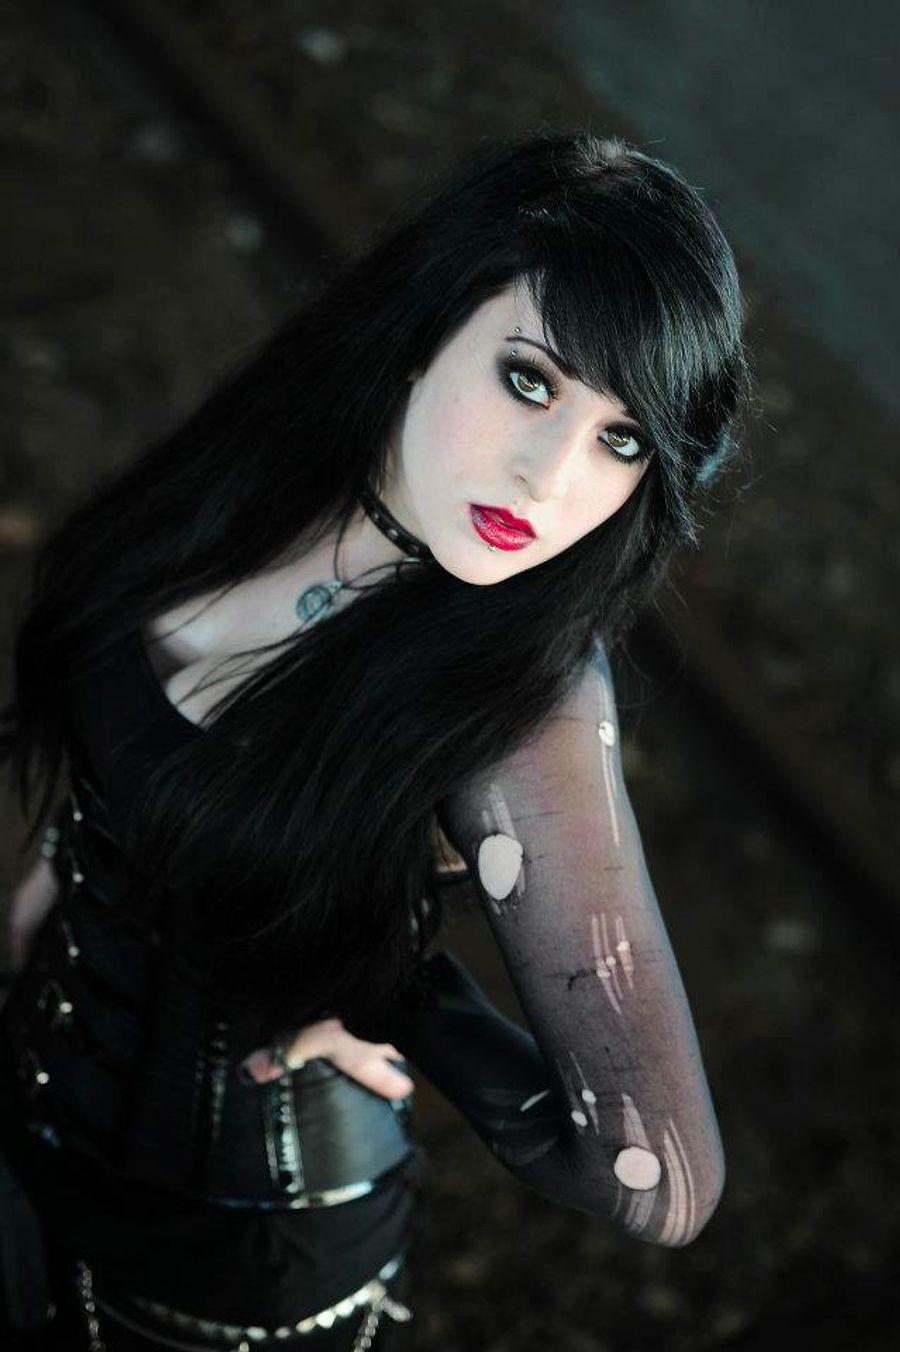 Hot goth girl teen - Full movie